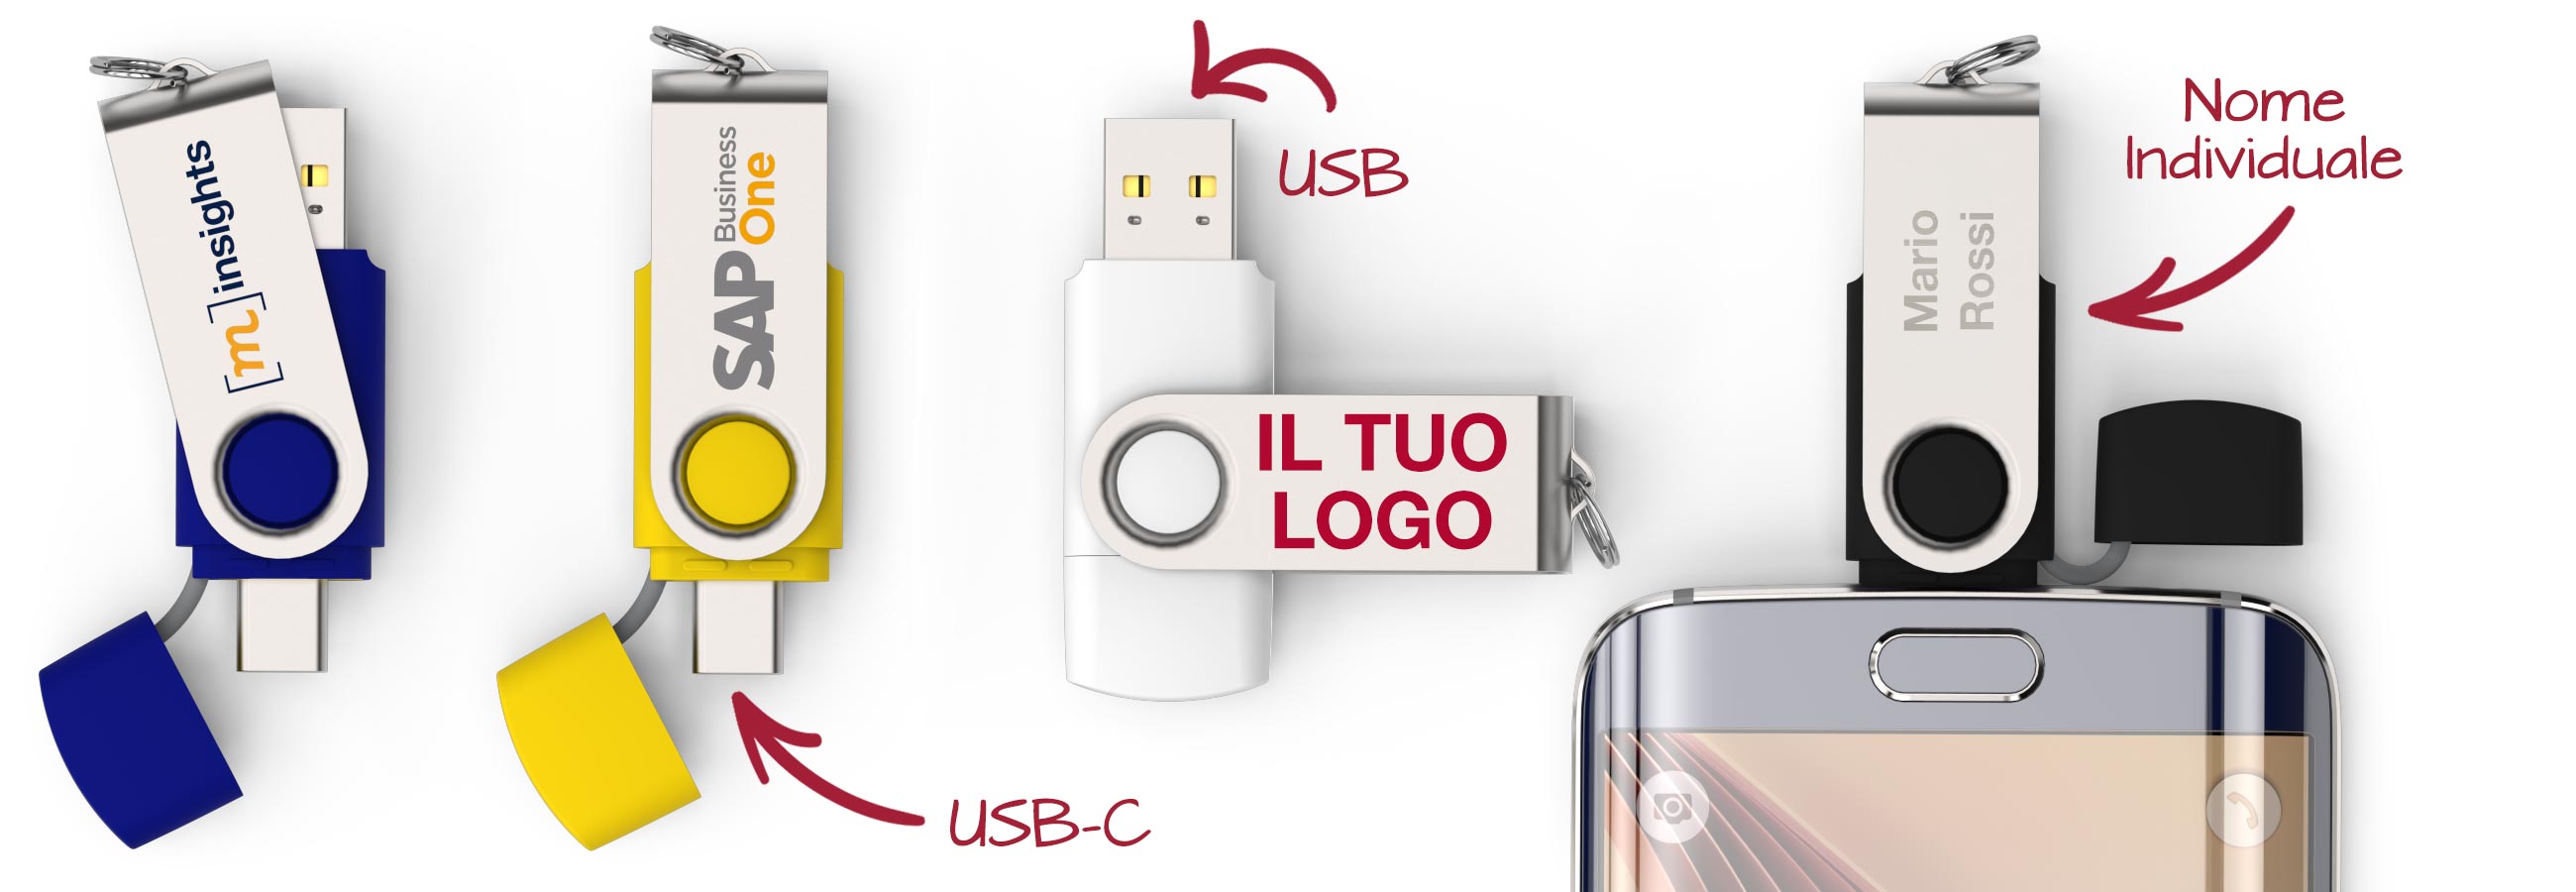 Chiavetta USB Twister Go